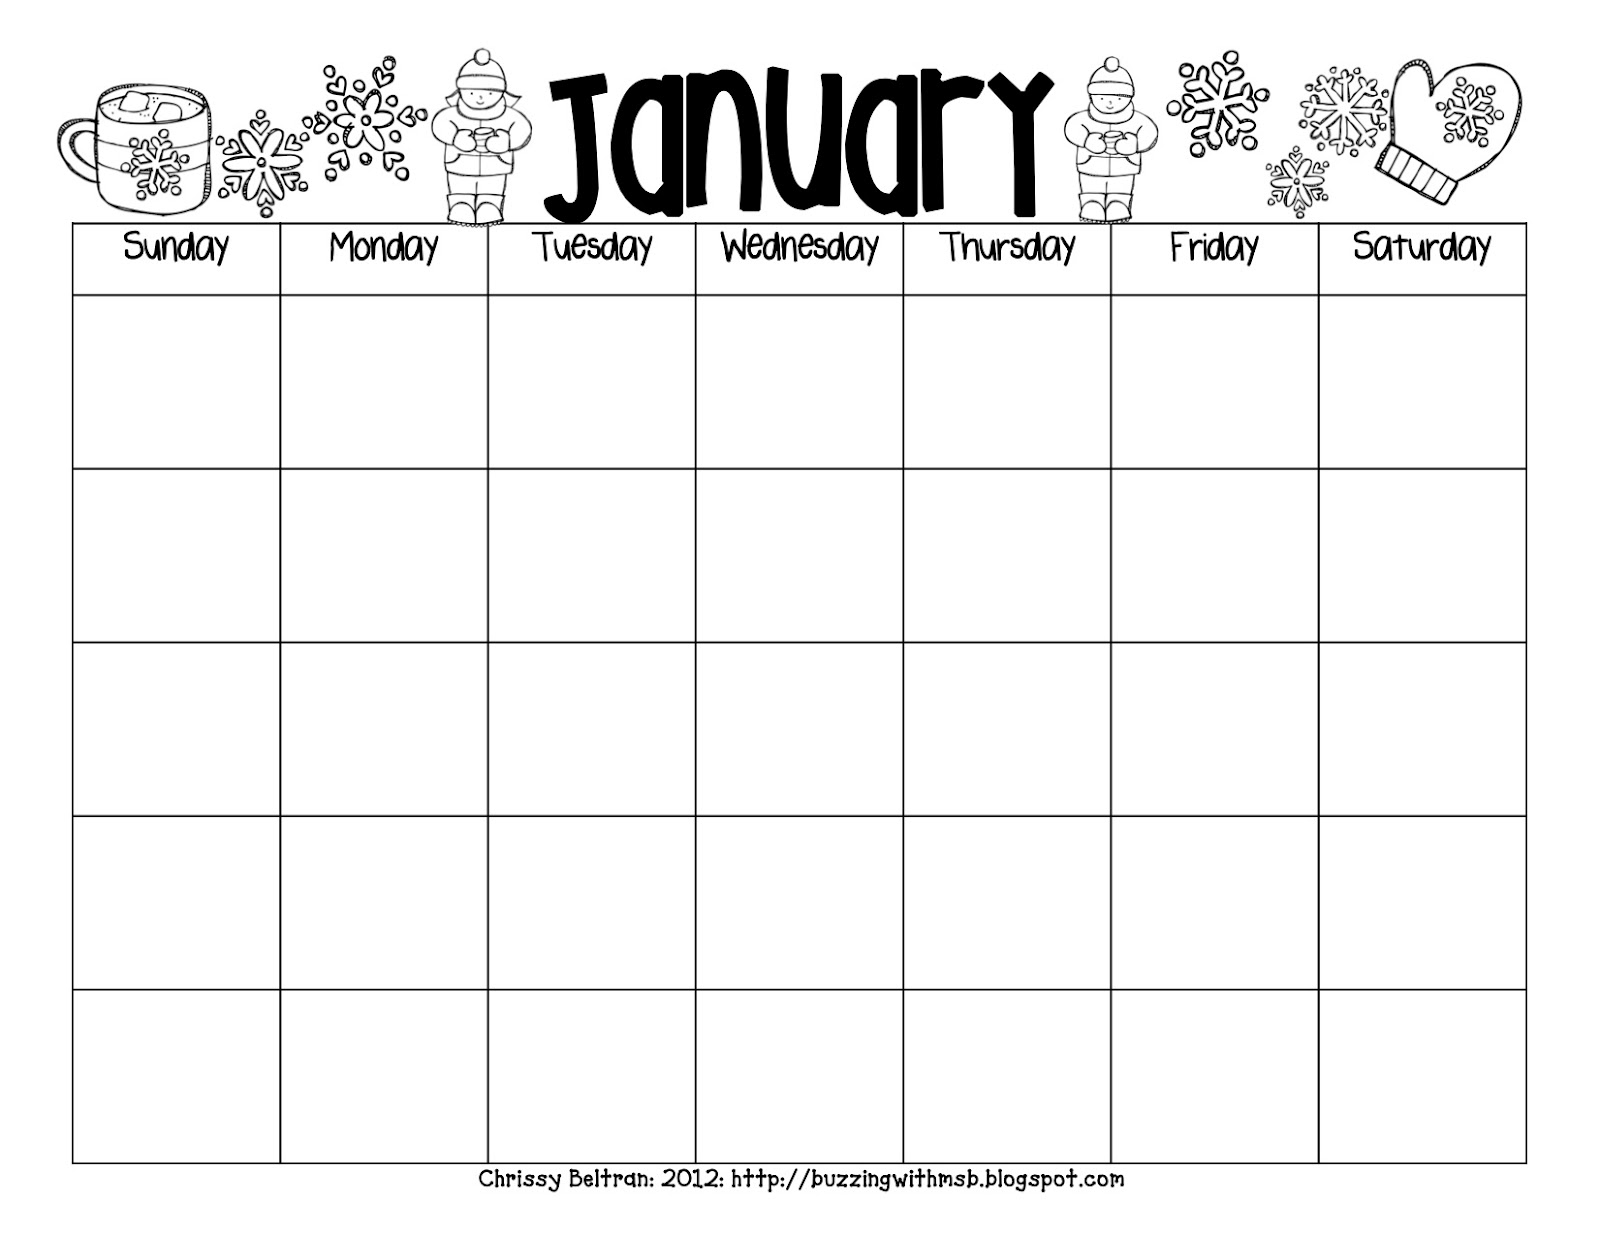 November homework calendar